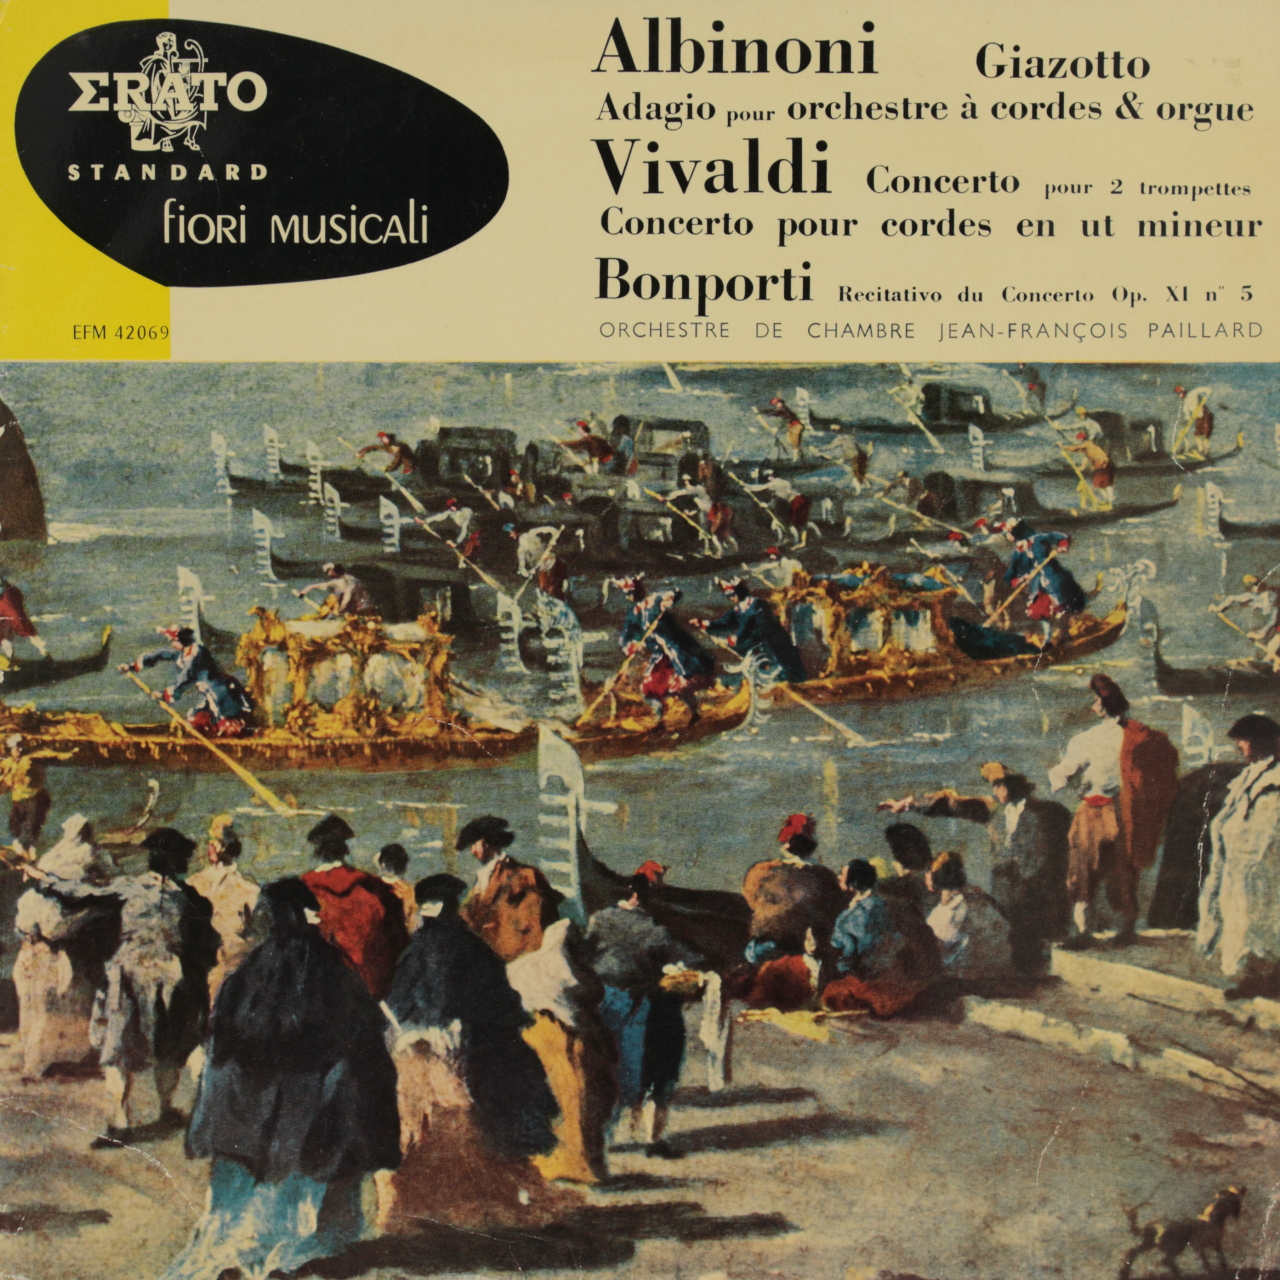 Albinoni: Adagio / Vivaldi: Concertos / Bonporti: Recitativo